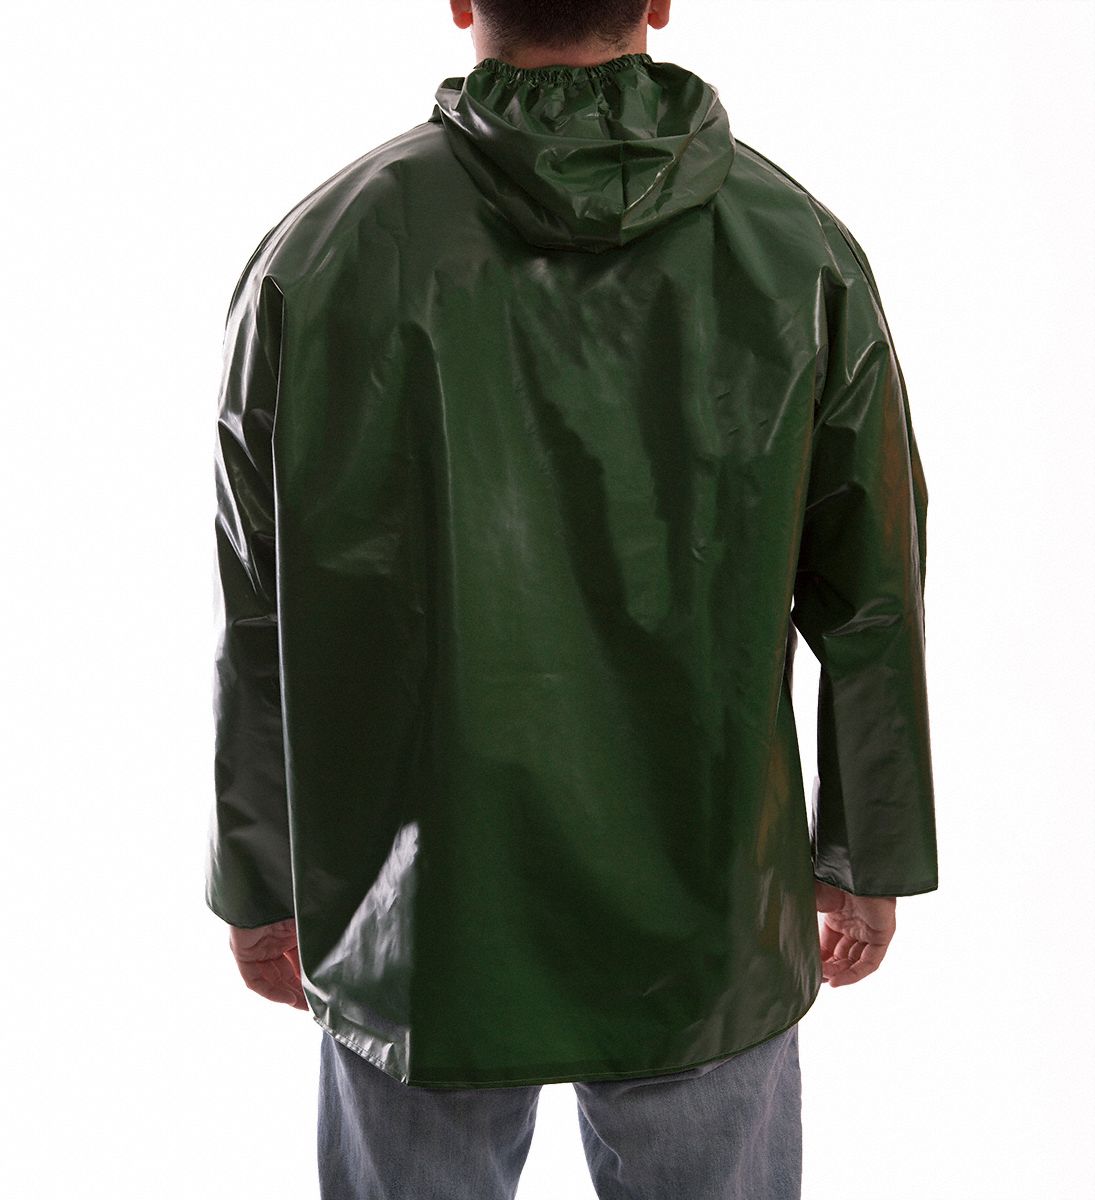 TINGLEY Rain Jacket with Hood: Rain Jacket, L, Green, Snaps with Storm ...